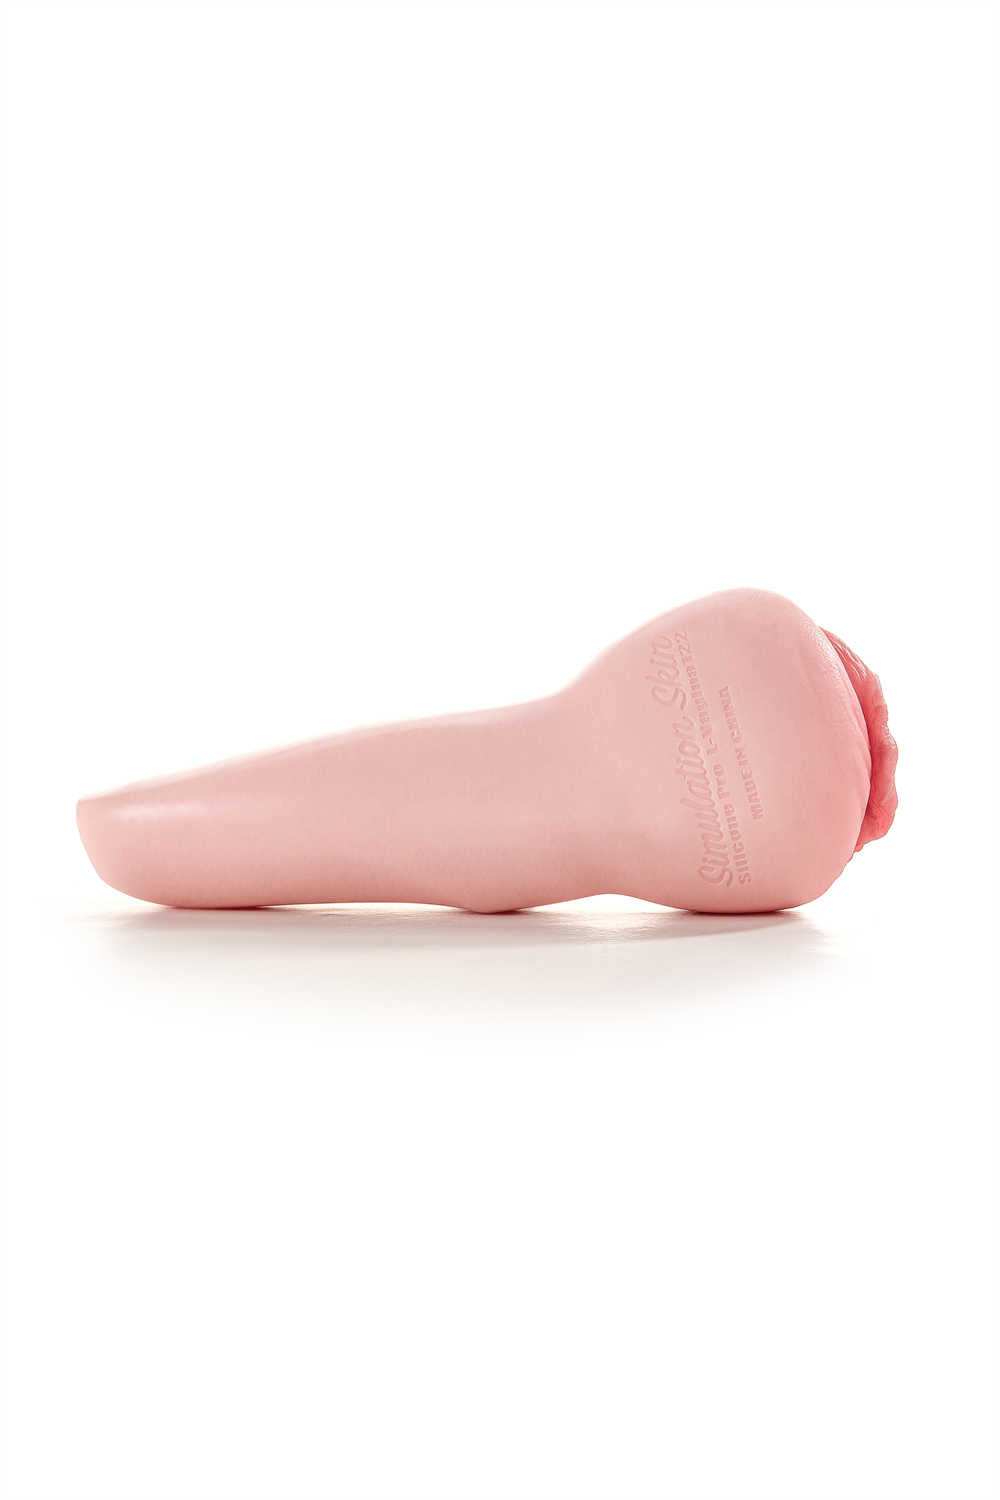 Silicone Realistic Masturbation Cup Vagina 122 (SG)